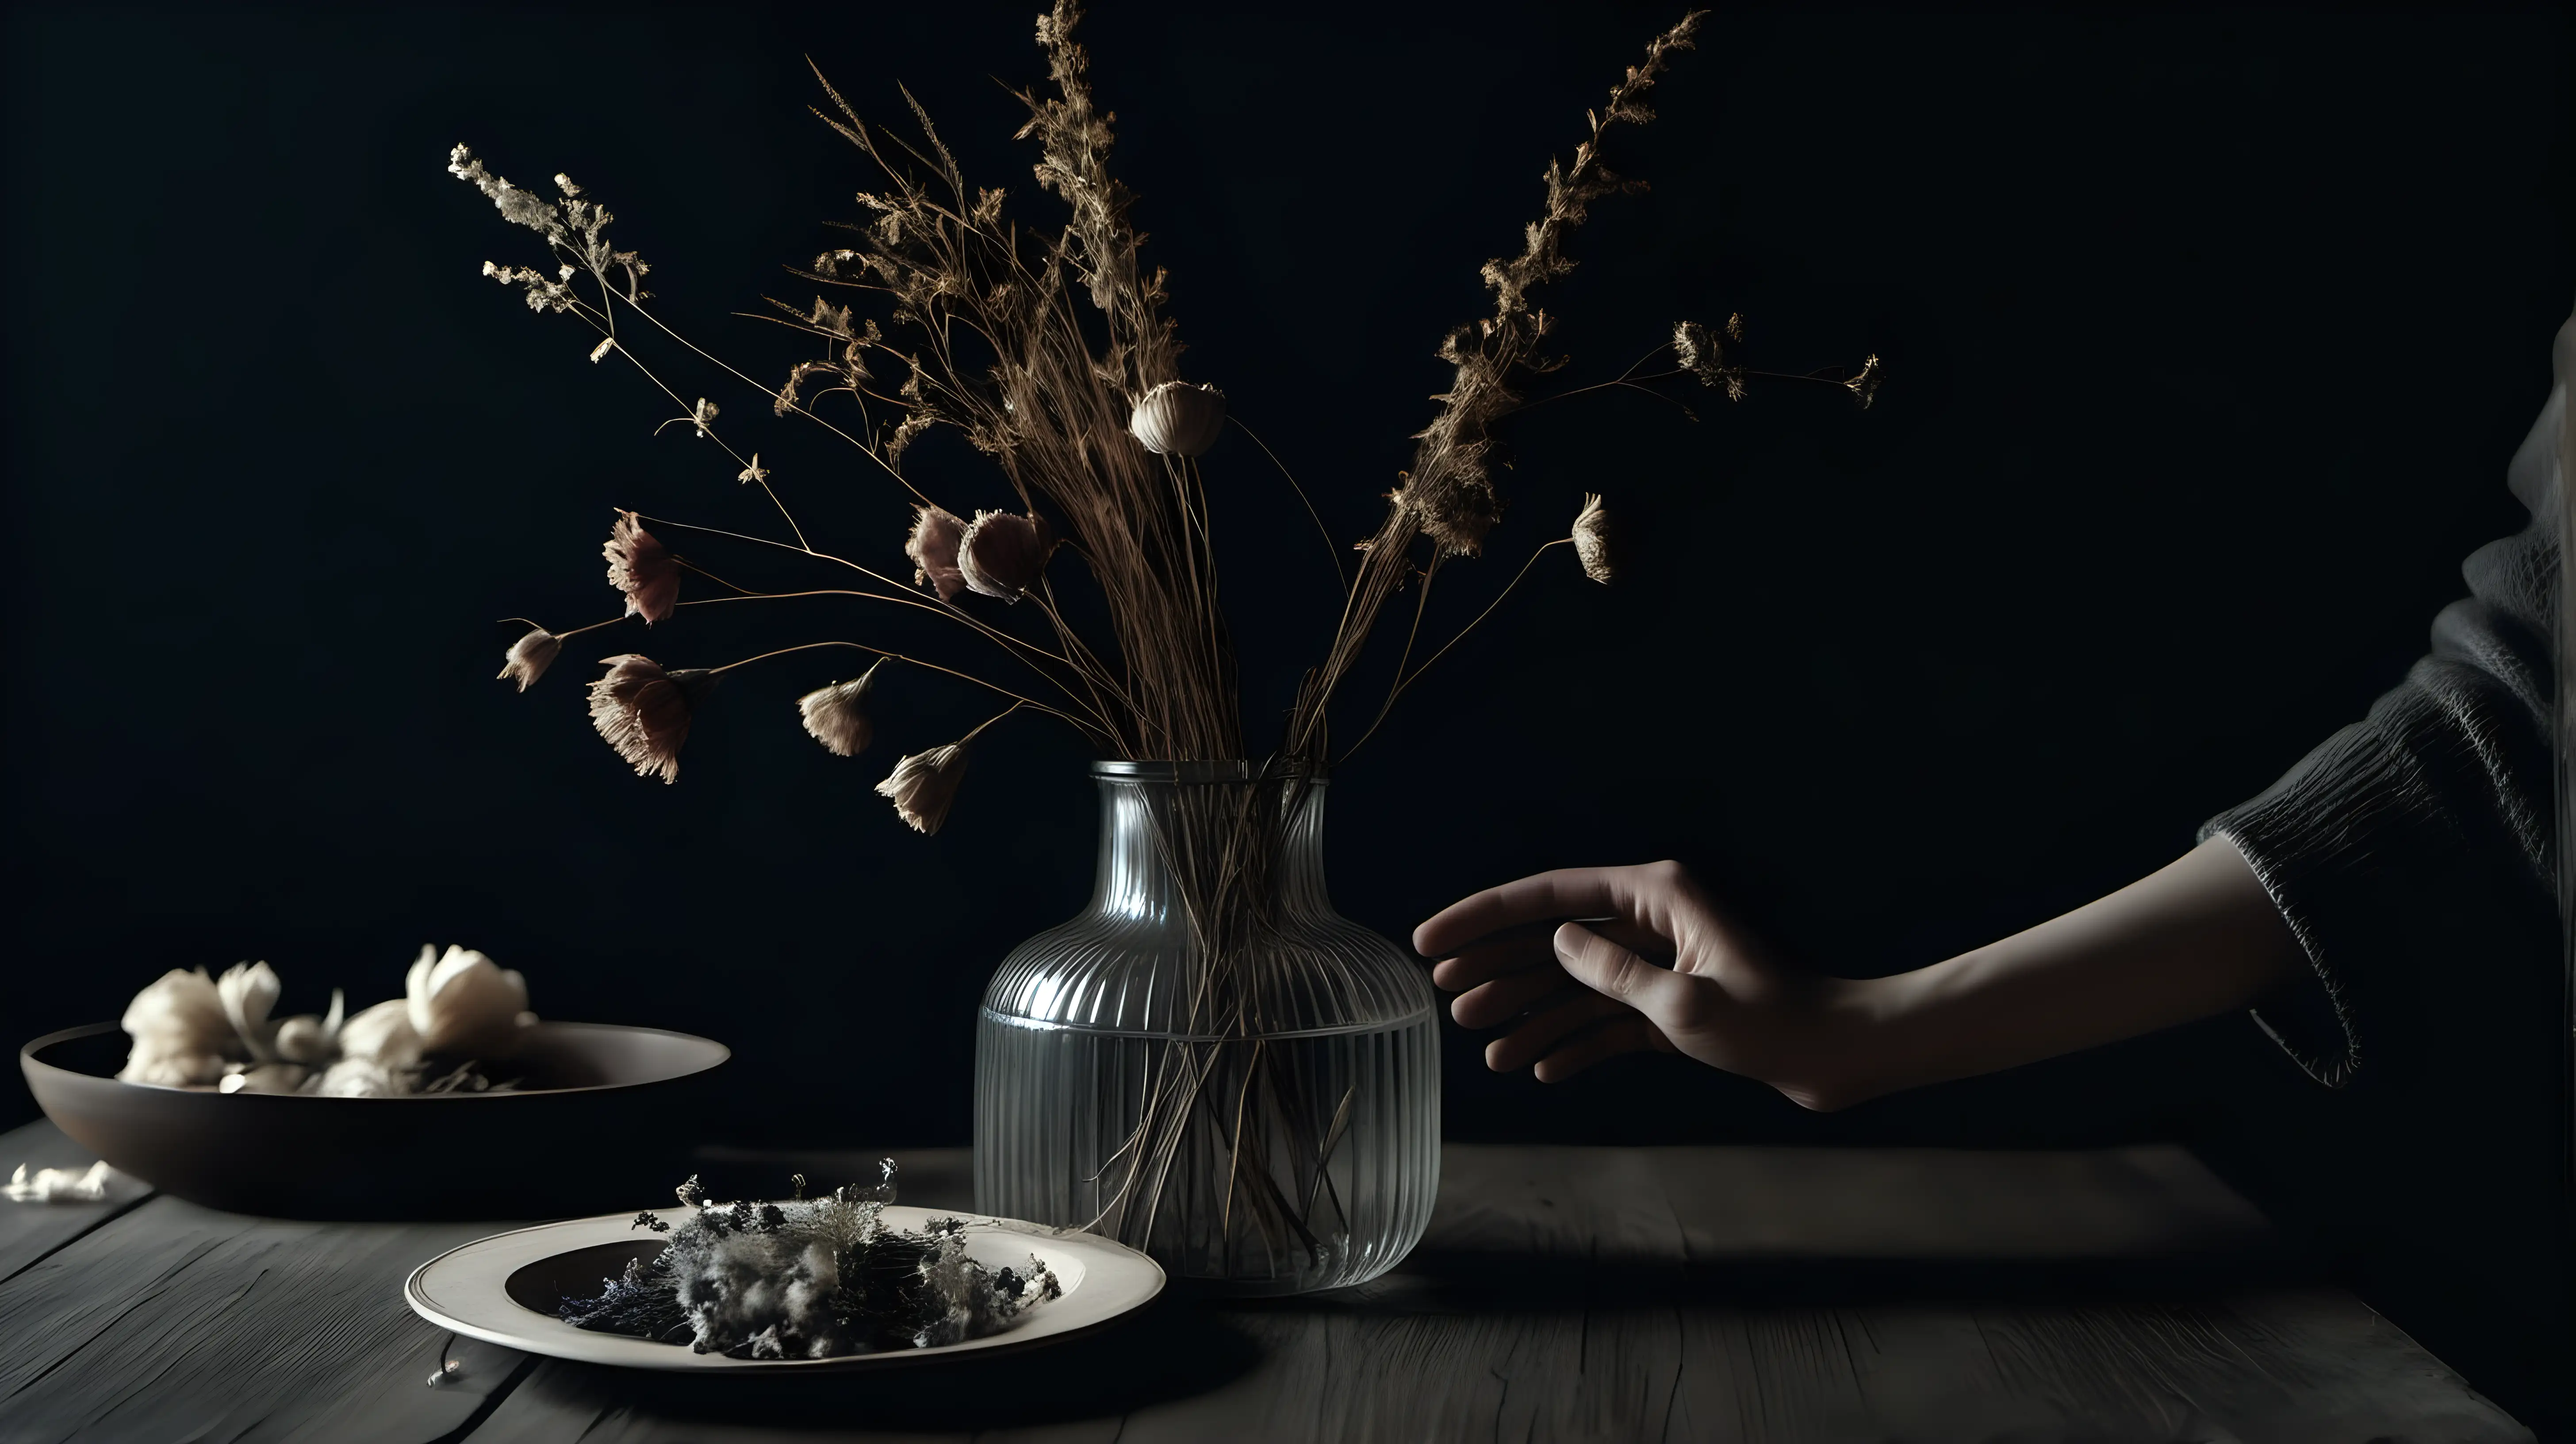 Elegant Hands with Dried Flower Vase in Soft Illumination